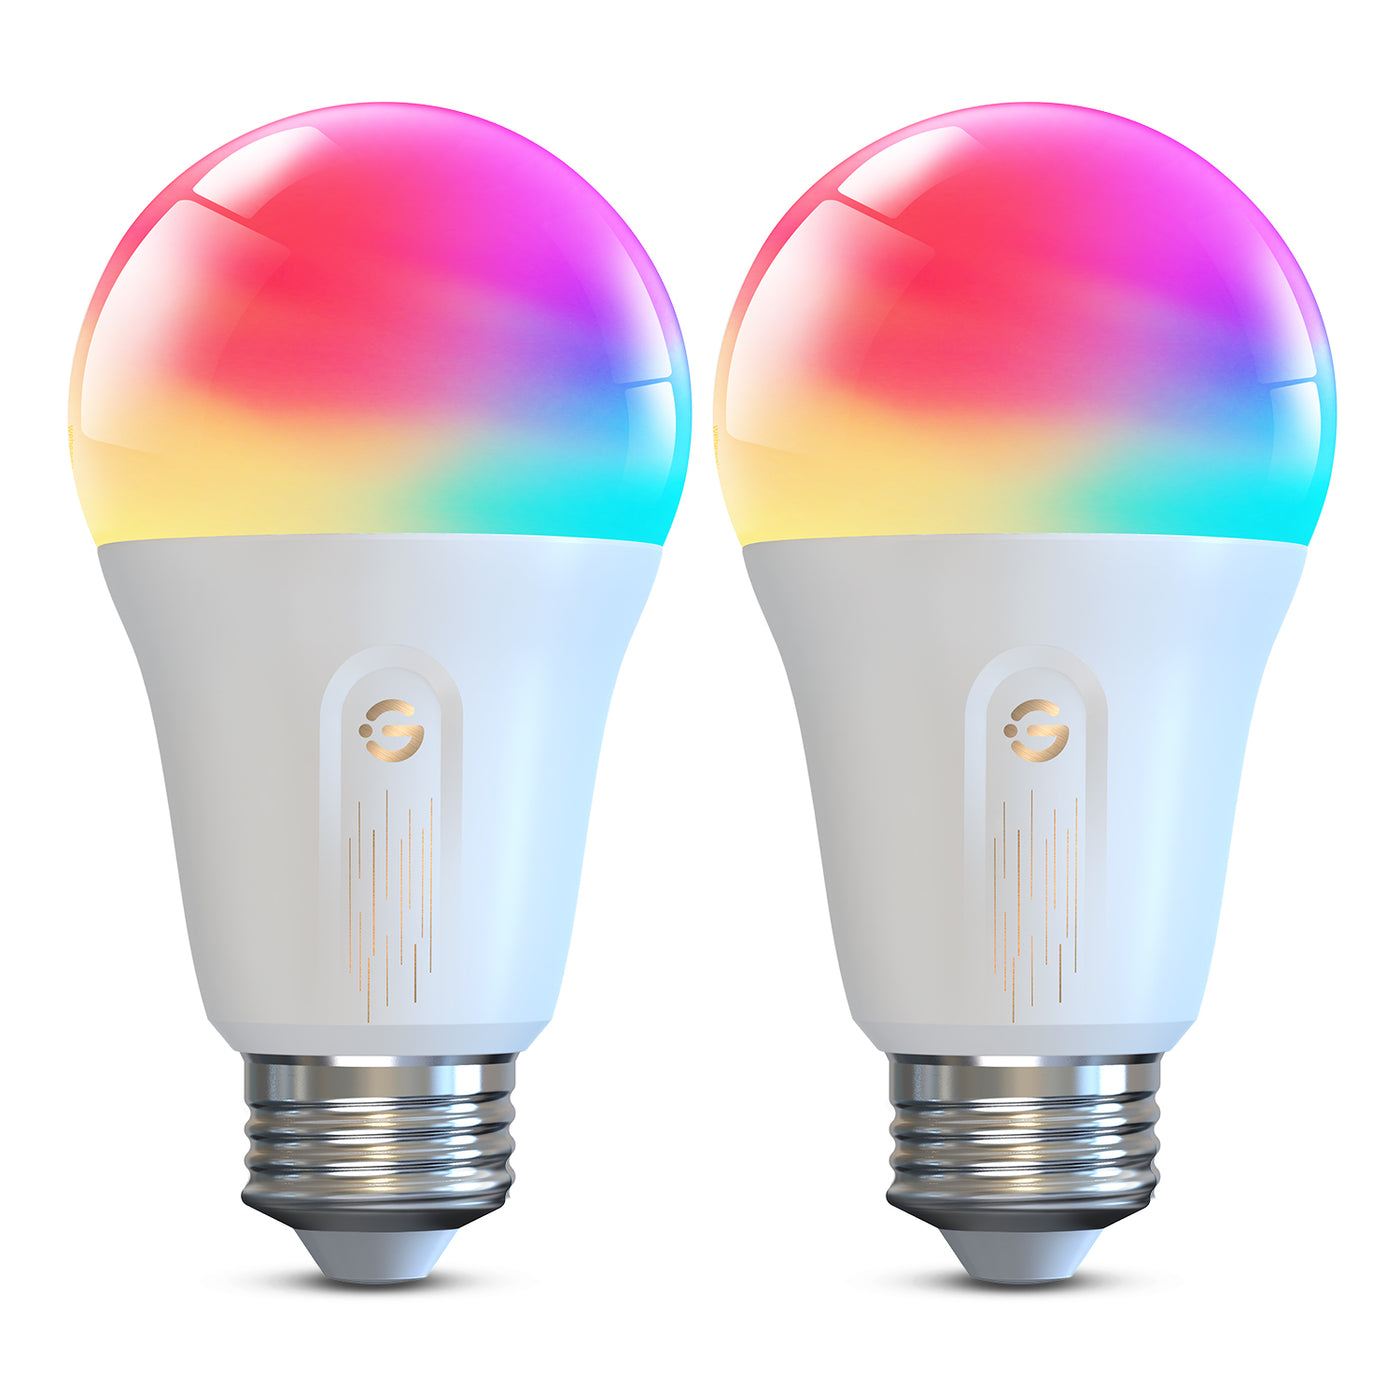 Govee Smart RGBWW Bulbs 1200 Lumens